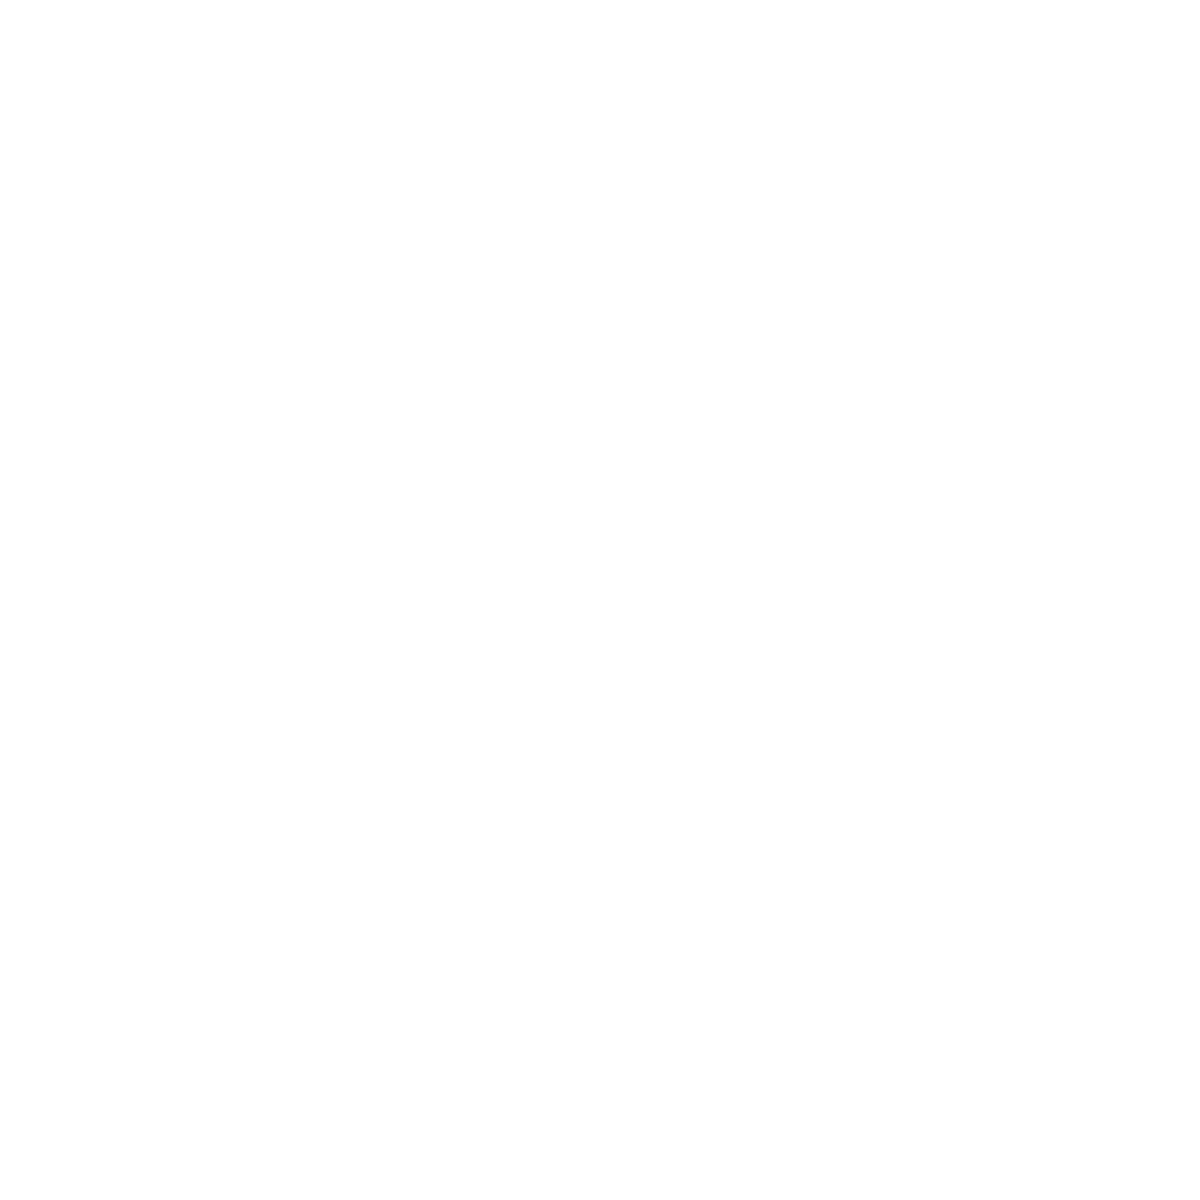 Red Jalisco